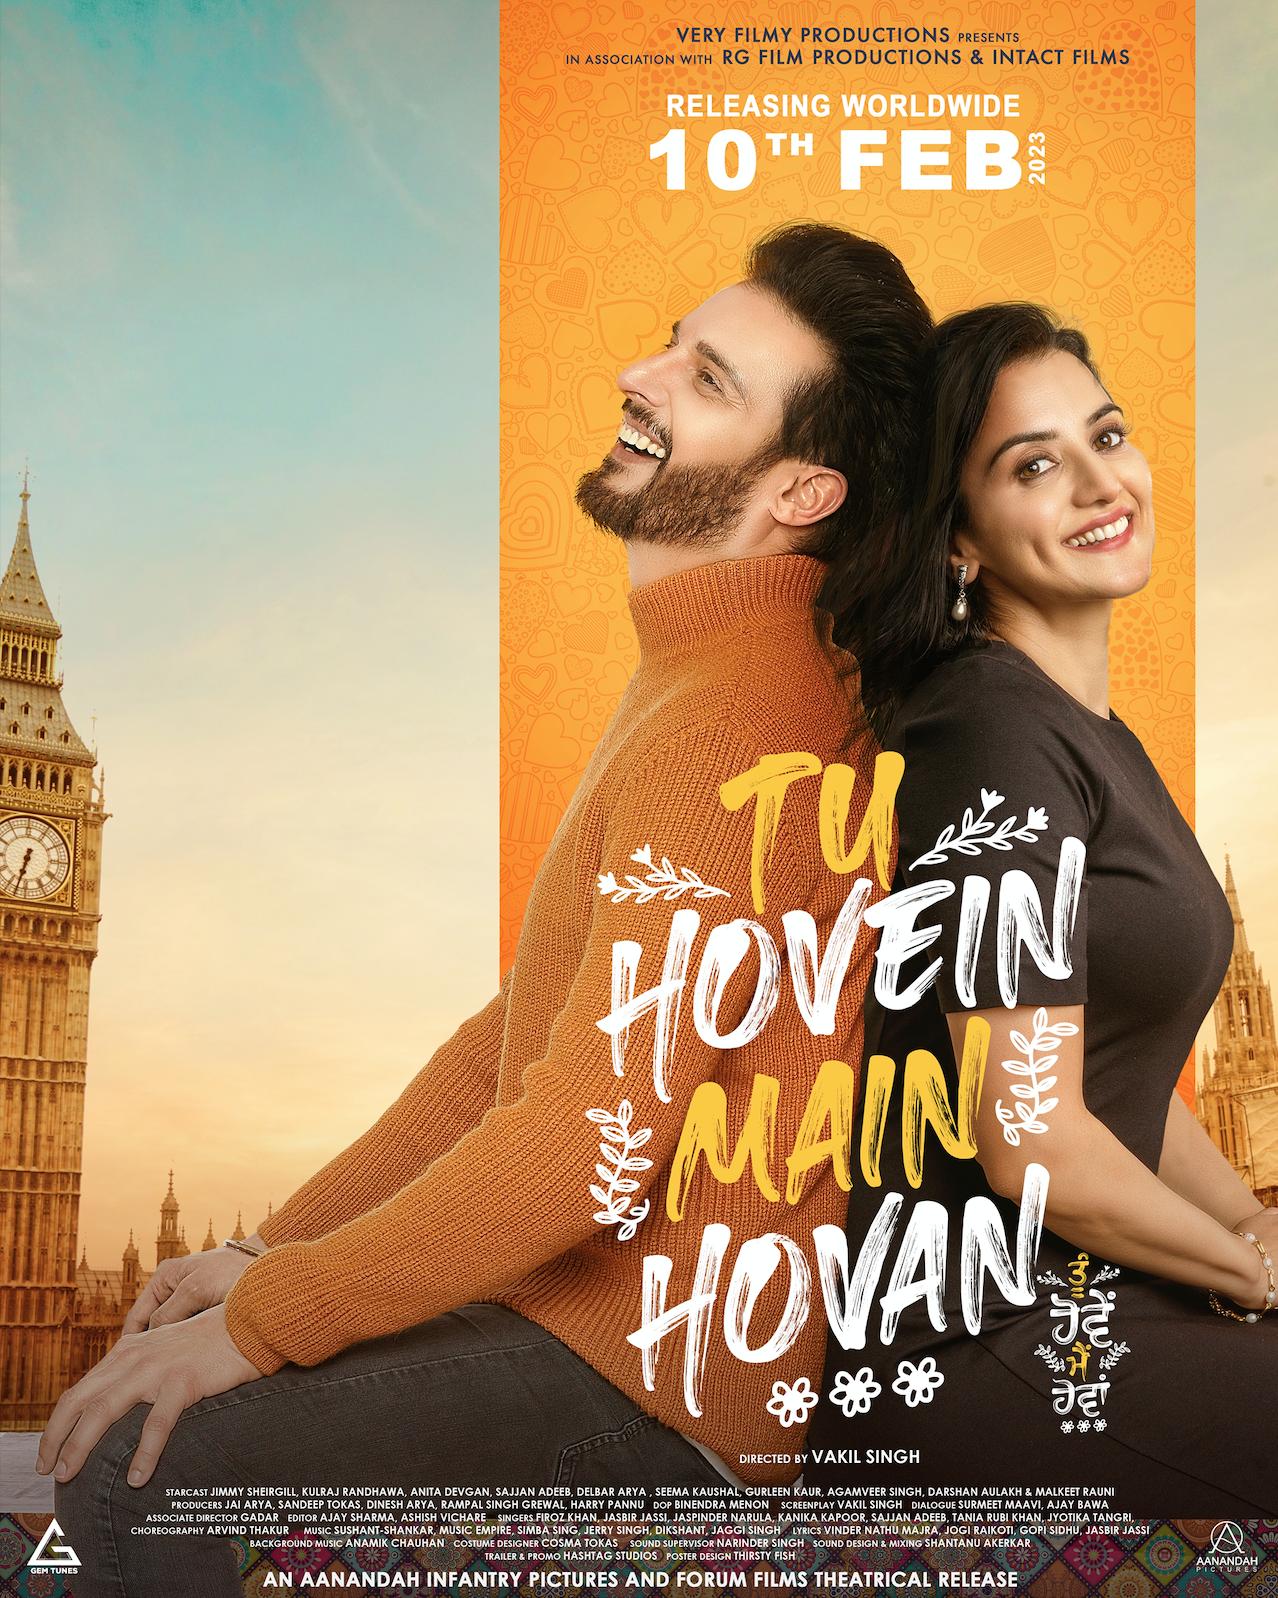 Tu Hovein Main Hovan Movie Review | Tu Hovein Main Hovan Filmy Rating 2023